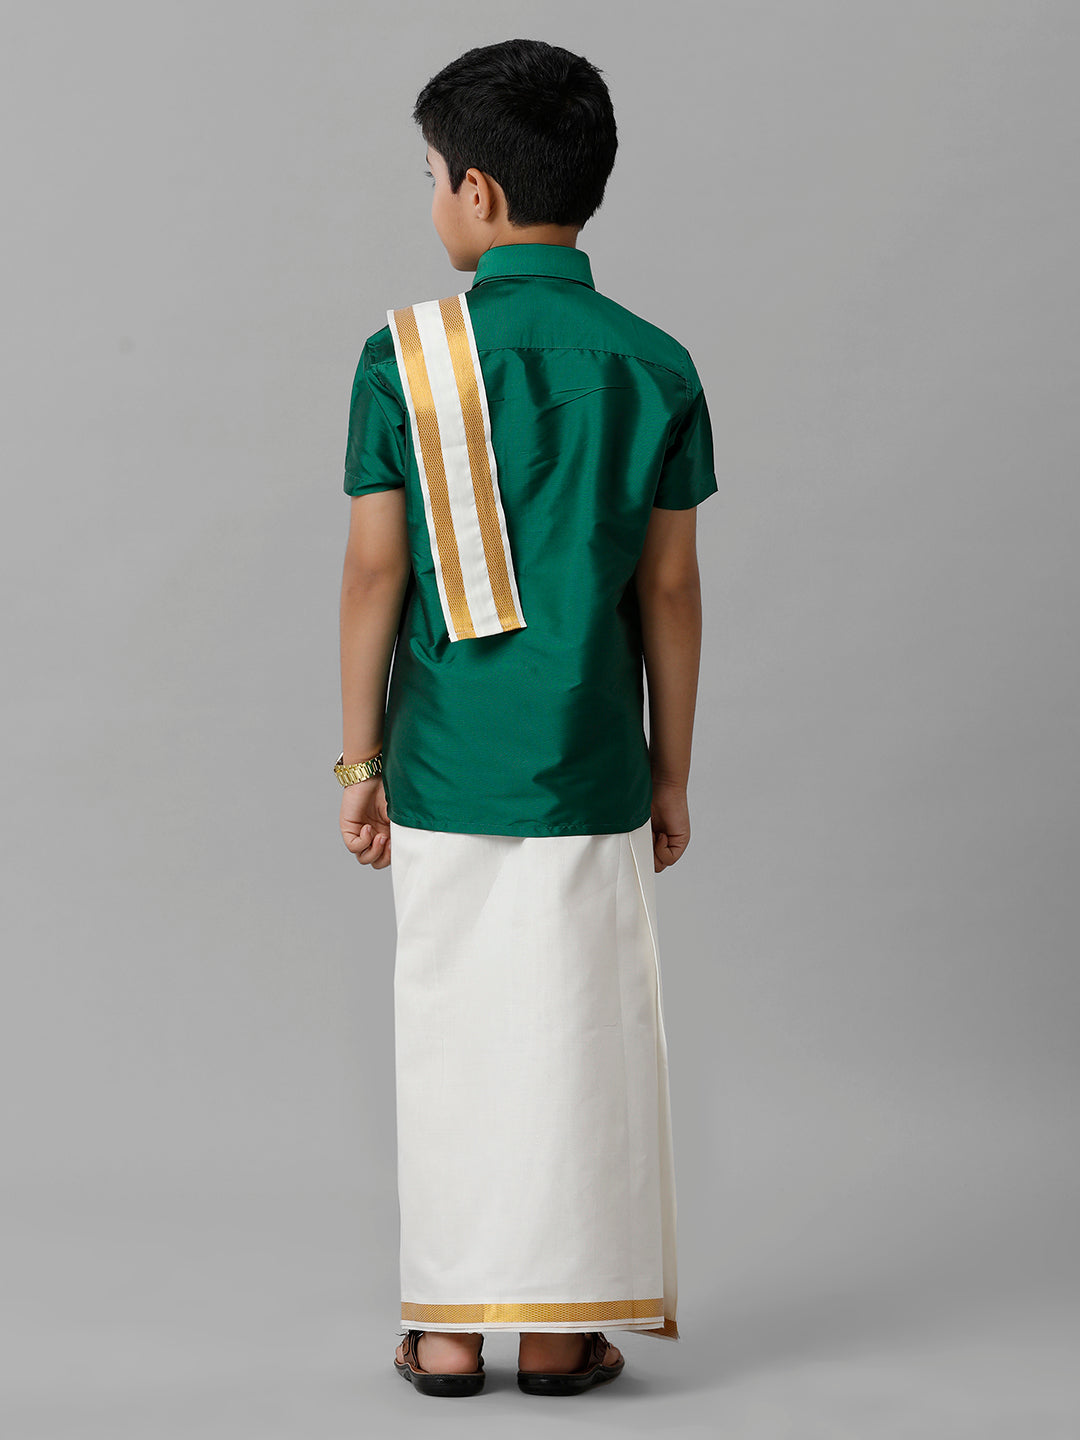 Boys Silk Cotton Green Half Sleeves Shirt with Adjustable Cream Dhoti Towel Combo K9-Back view